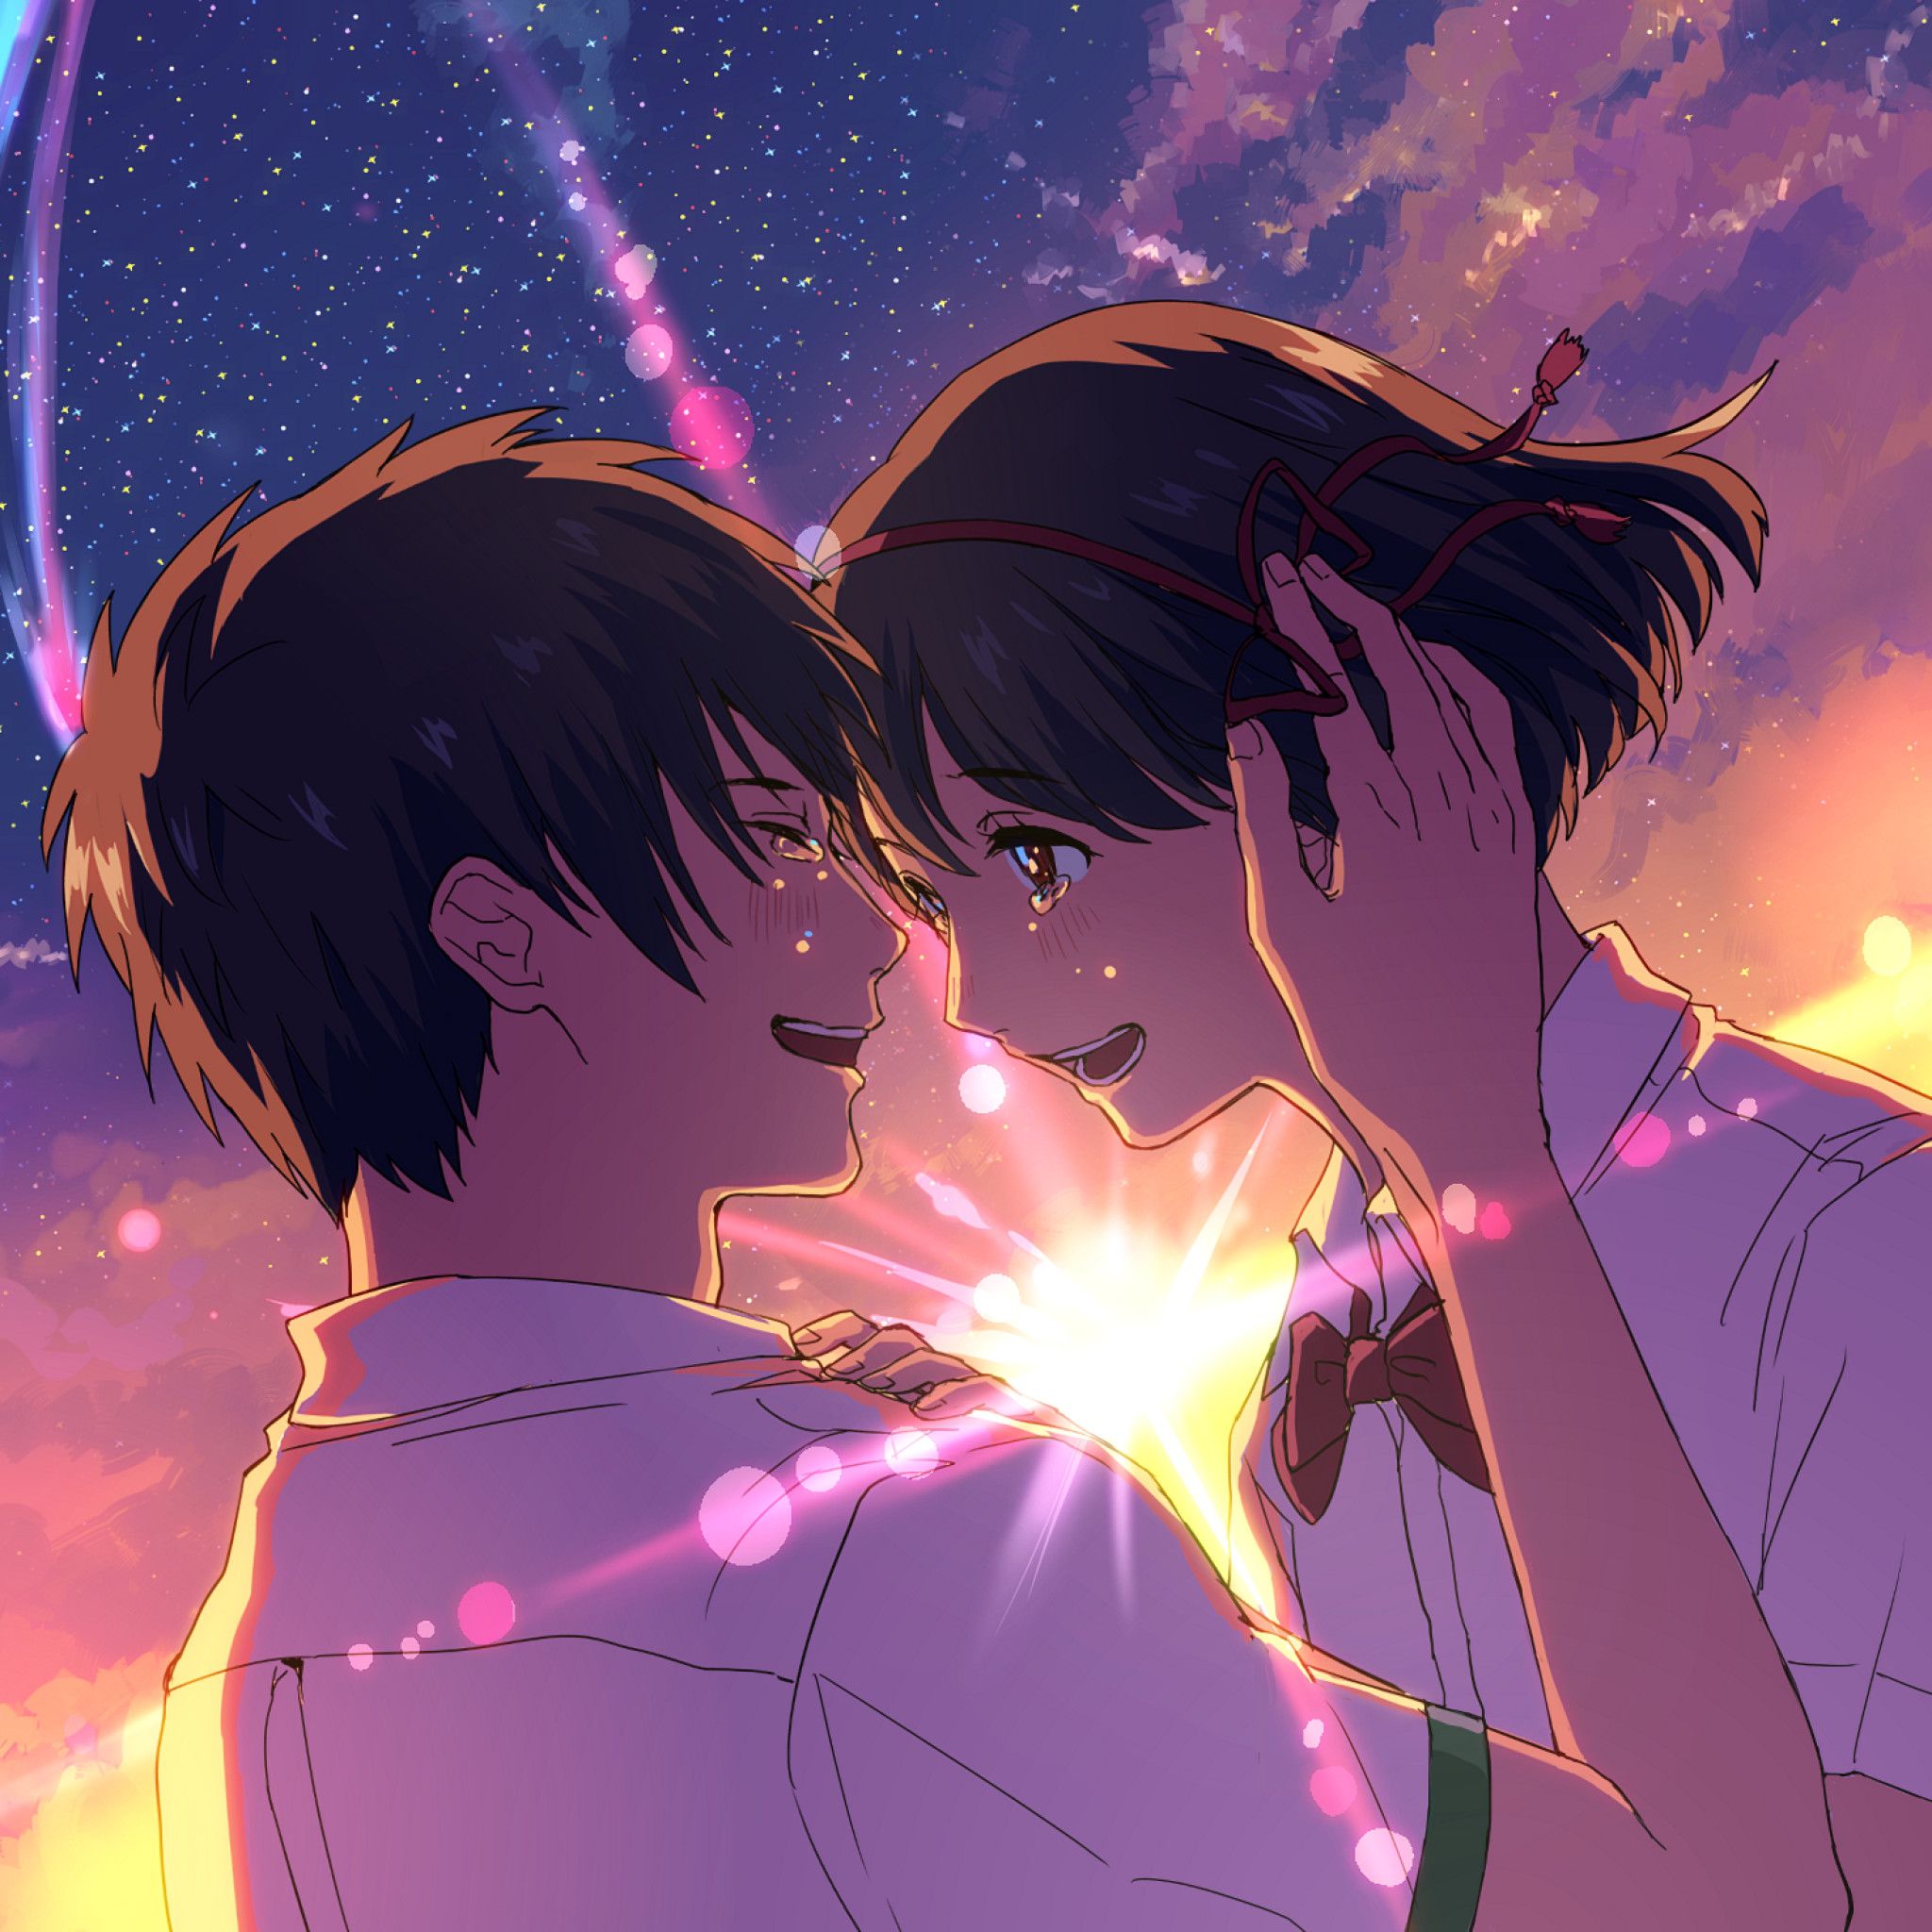 Romantic Anime Wallpaper